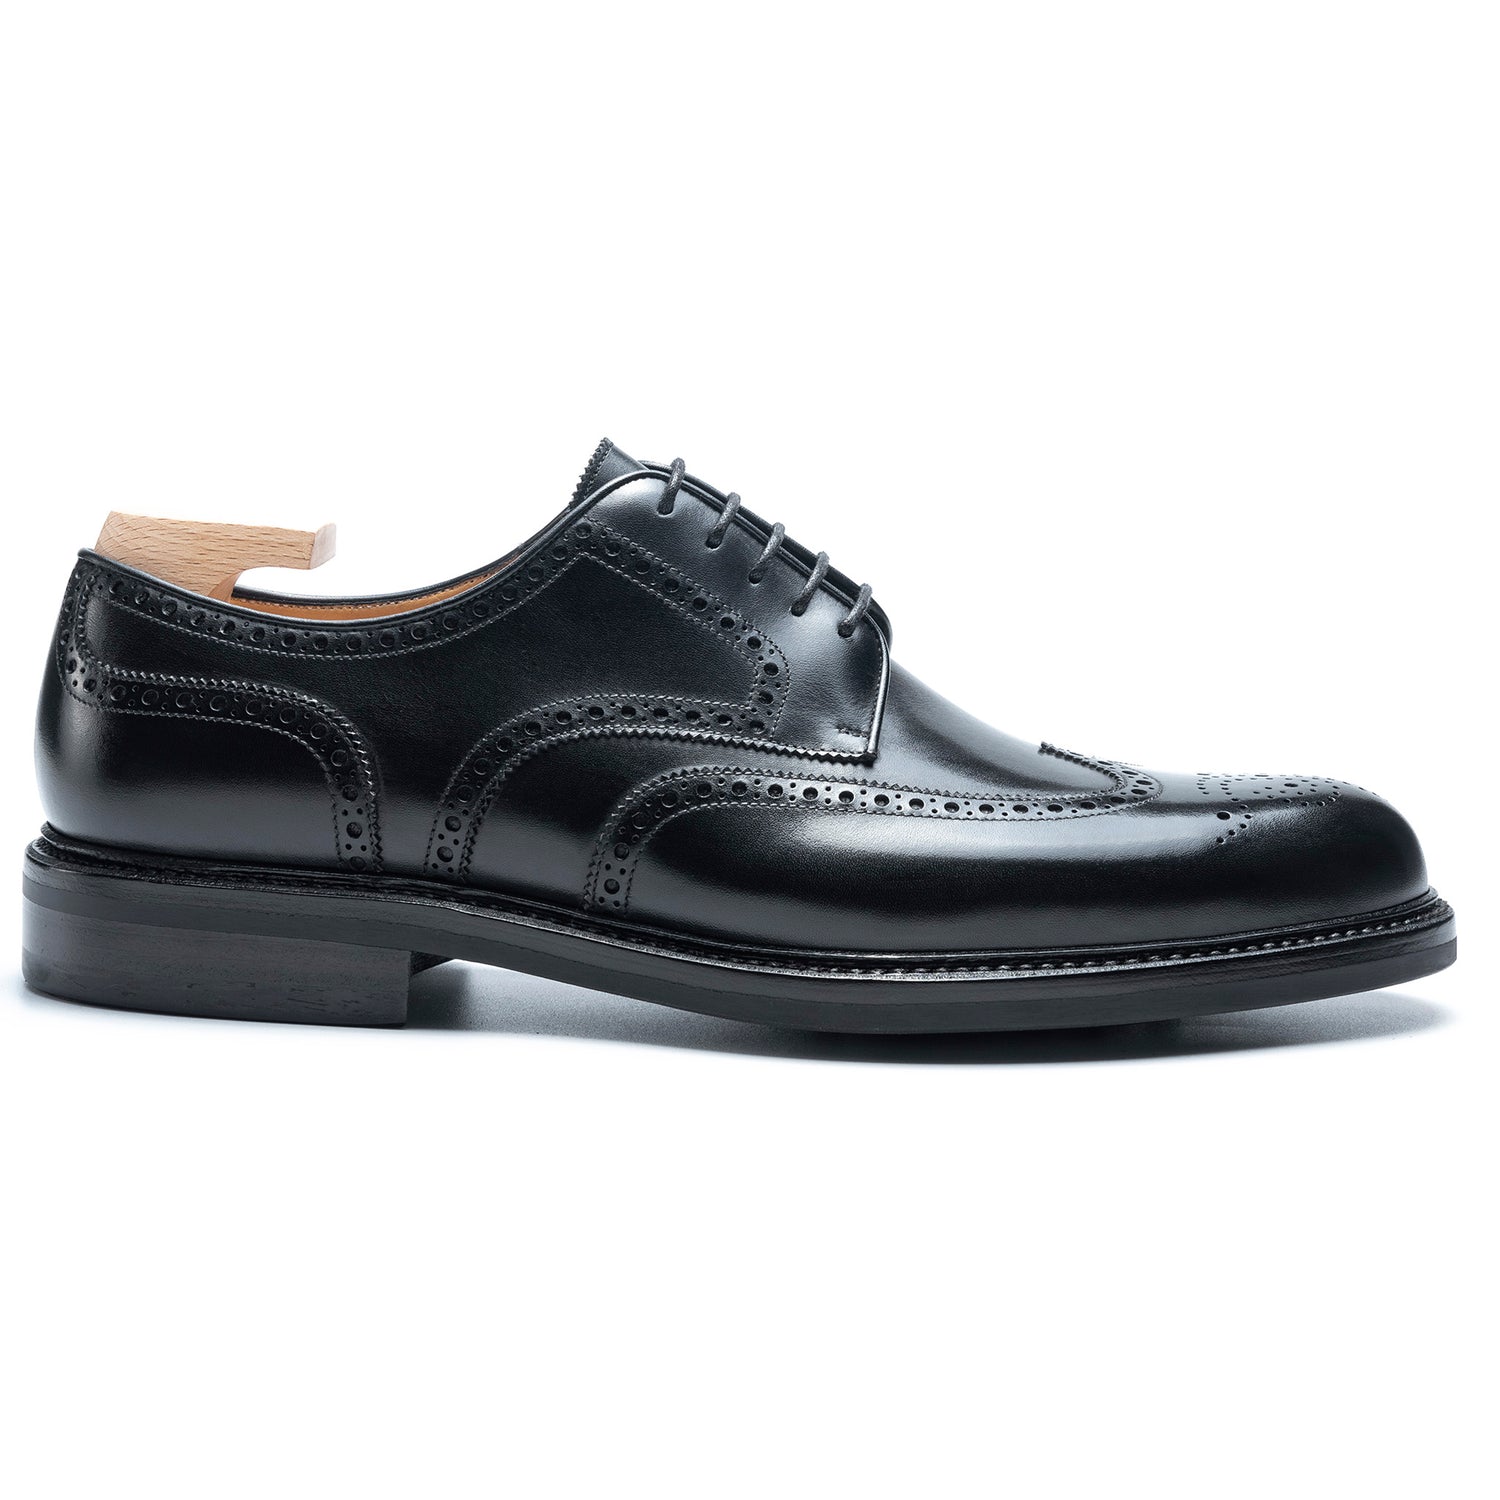 TLB Mallorca leather shoes 679 / MADISON / BOXCALF BLACK